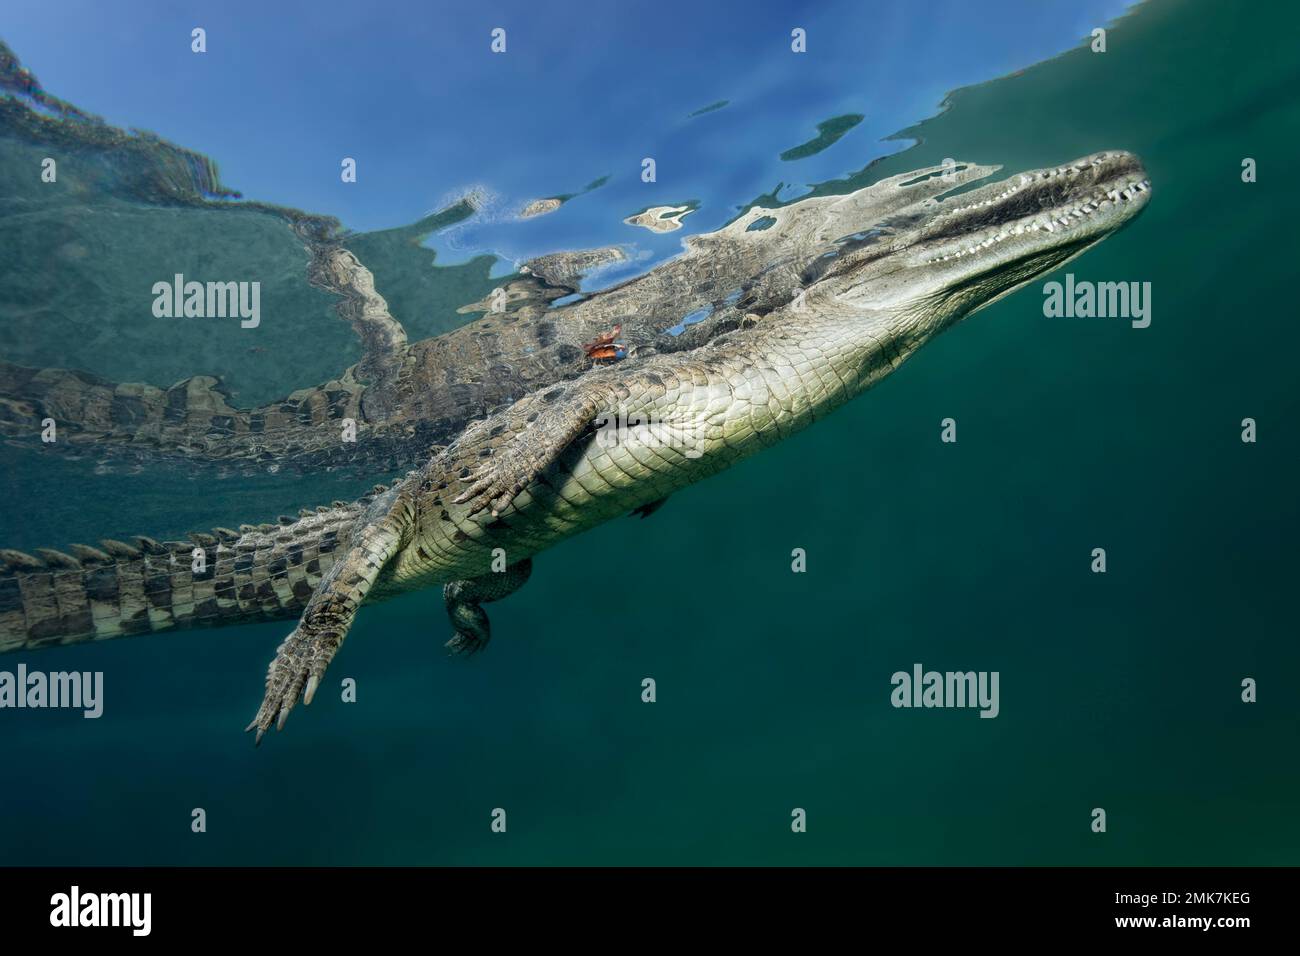 Pointed crocodile, or american crocodile (Crocodylus acutus), underwater, sea, just below surface, reflection, Jardines de la Reina, Caribbean Sea. Stock Photo